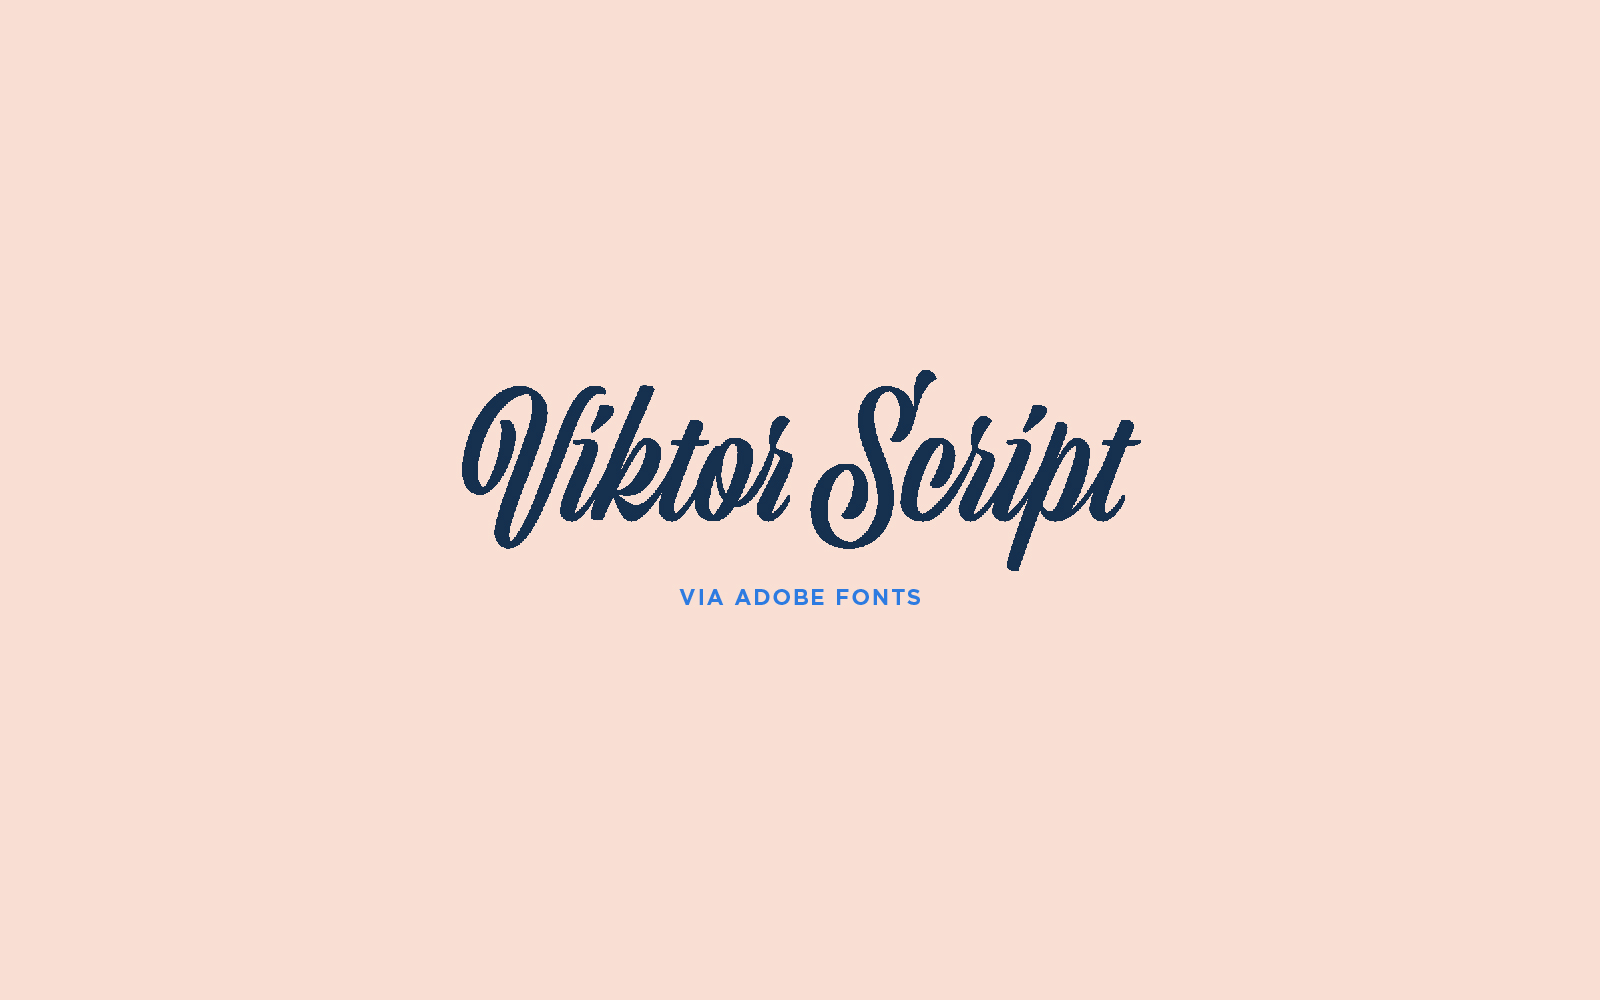 text graphic of viktor script